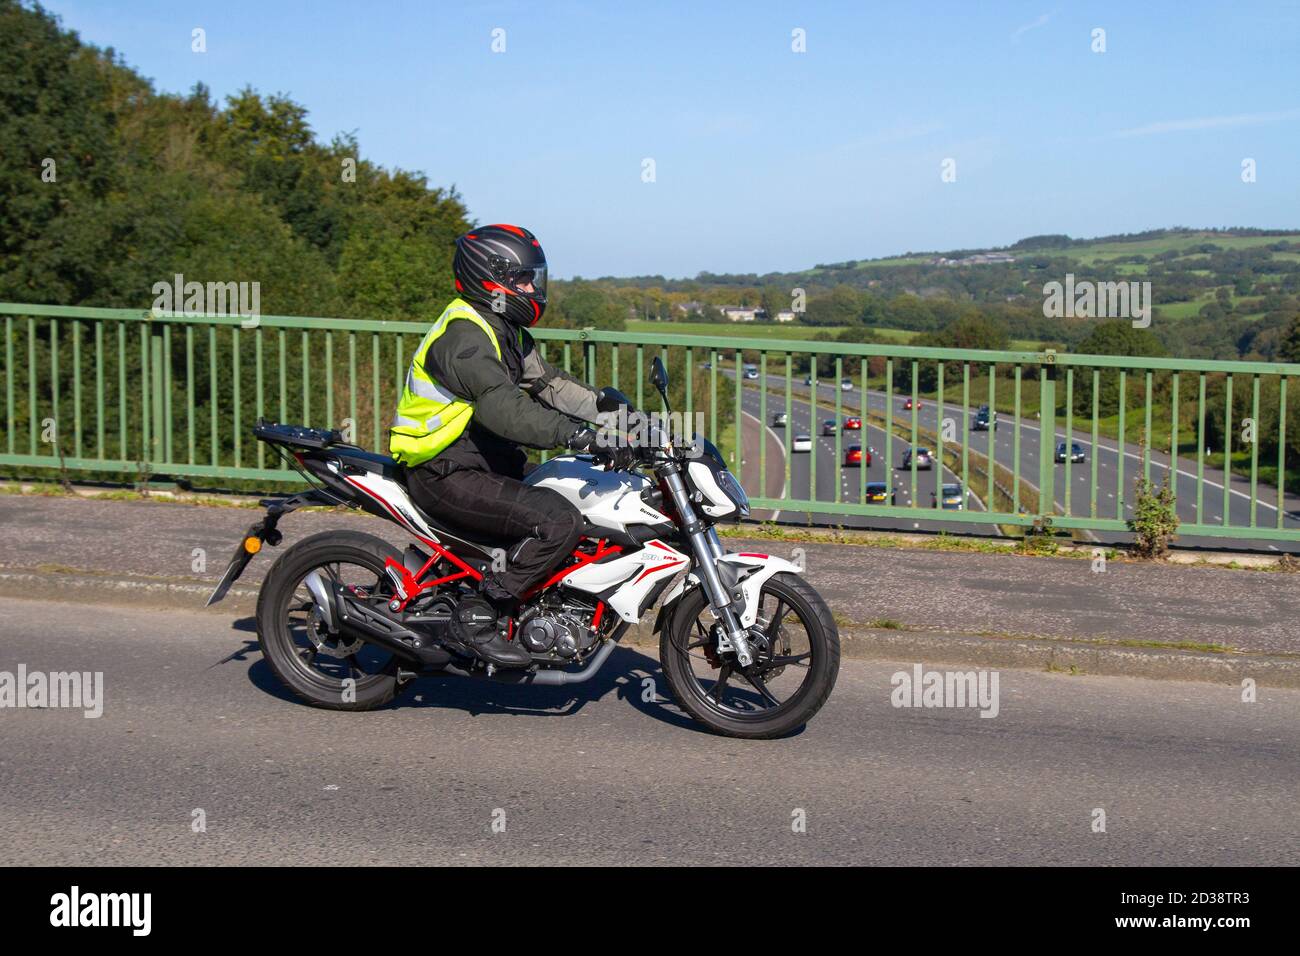 2019 blanc Benelli BN 125 moto rider; deux roues de transport, motos,  véhicule, routes, motos, motocycles motards moto à Chorley, Royaume-Uni  Photo Stock - Alamy